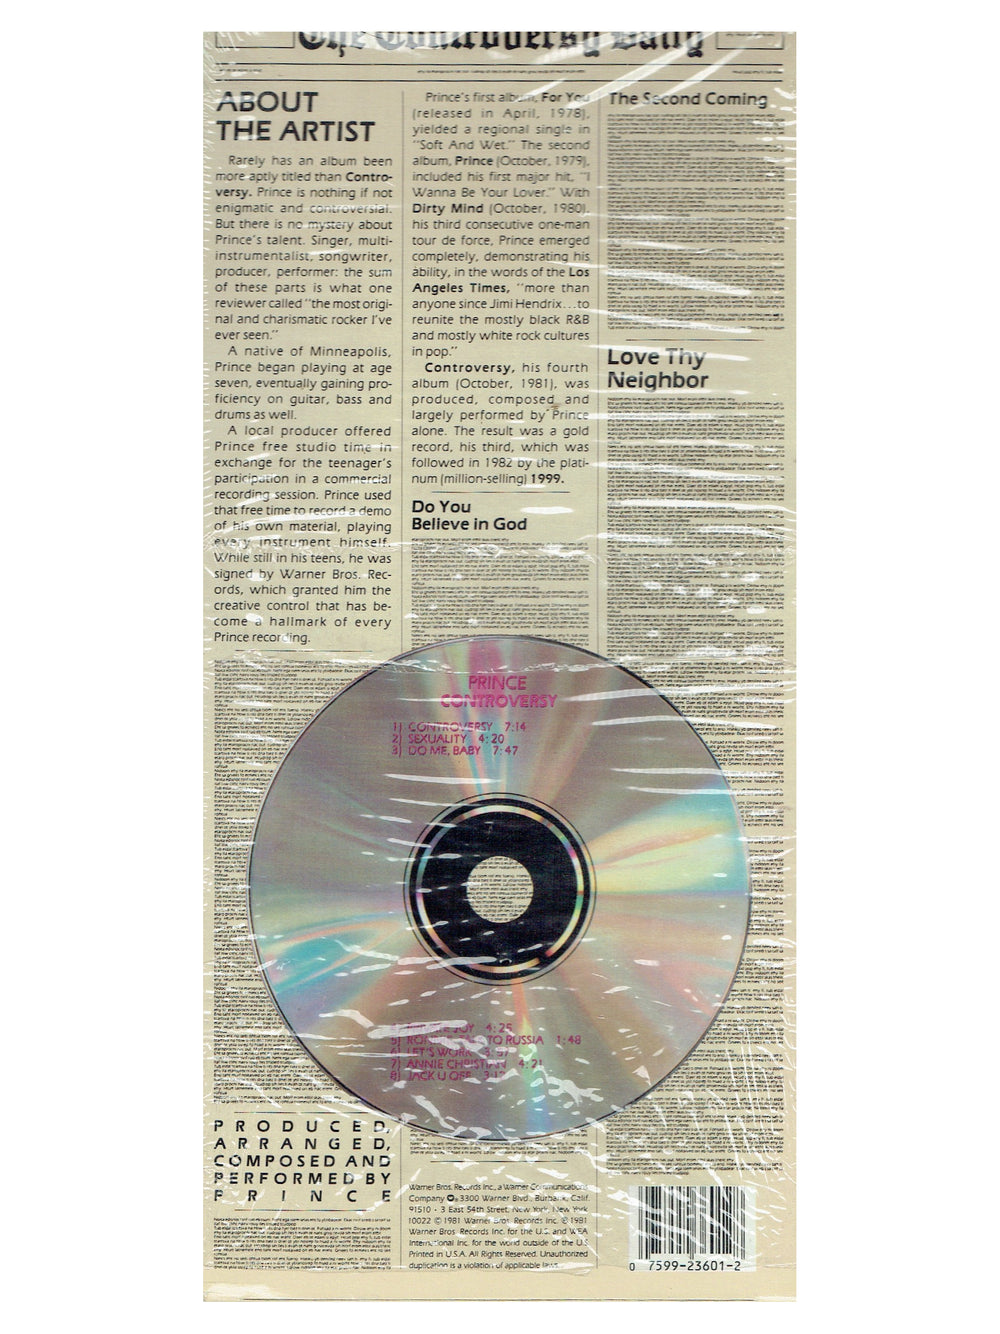 Prince Controversy Compact Disc CD Album Long Box USA Release Cellophane 3 Sides